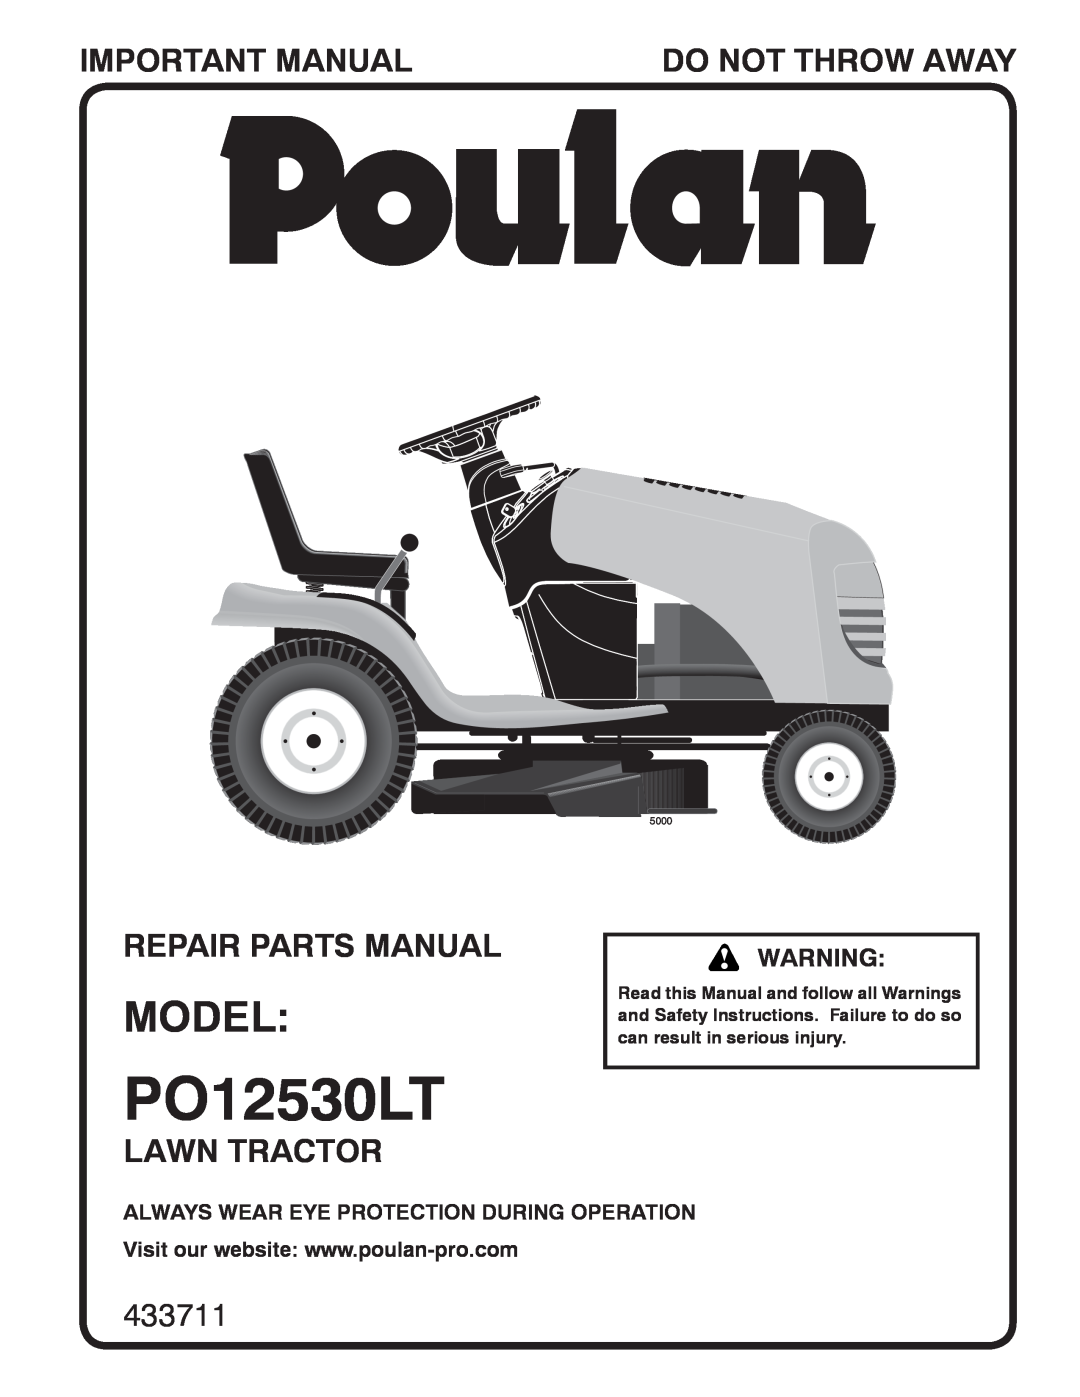 Poulan PO12530LT manual Model, Important Manual, Do Not Throw Away, Repair Parts Manual, Lawn Tractor, 433711, 5000 